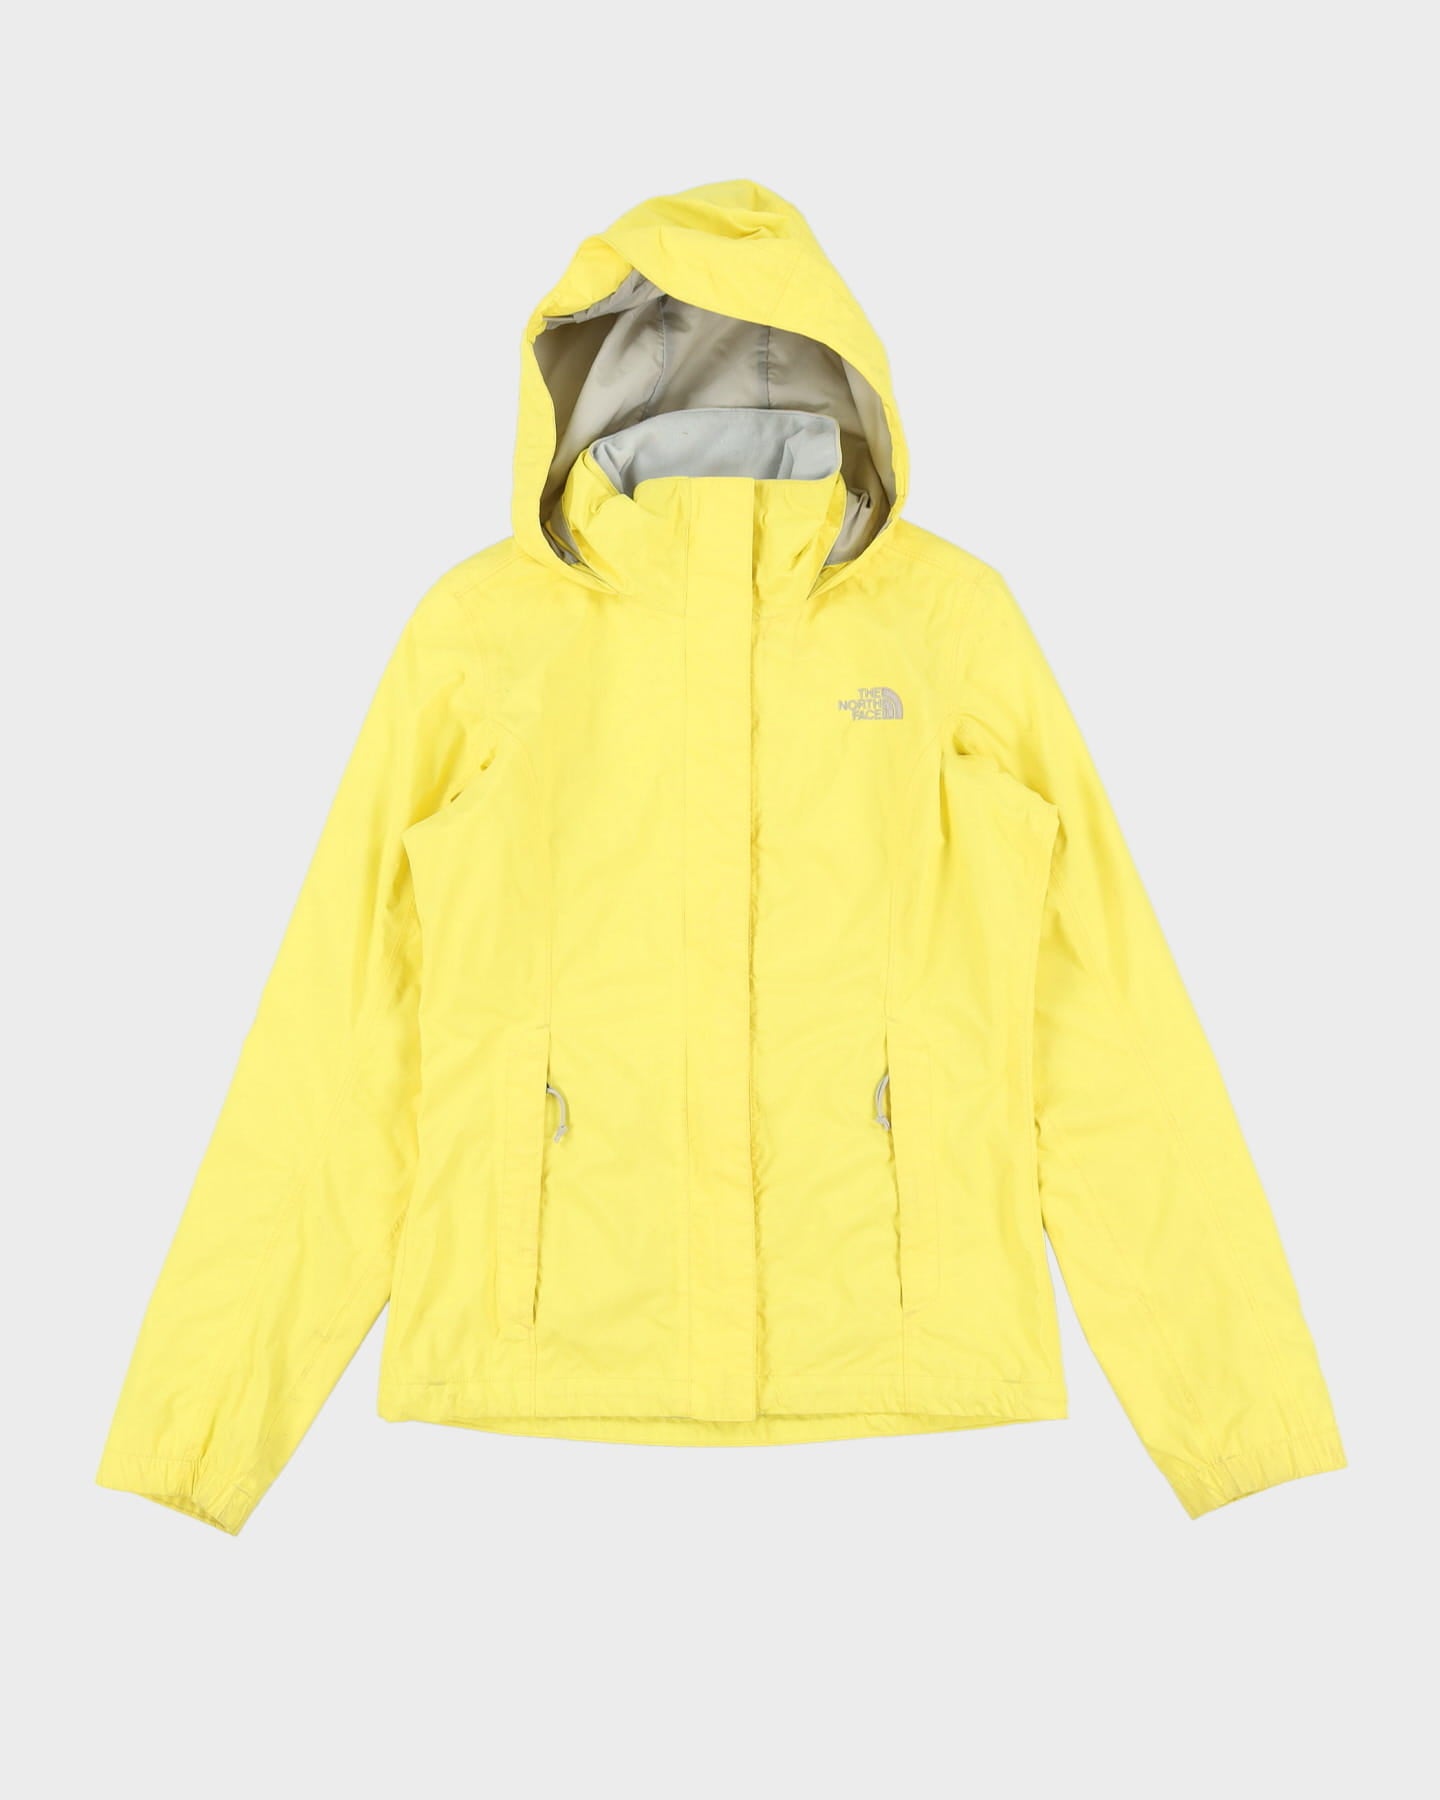 The North Face Yellow Anorak Rain Jacket - XS